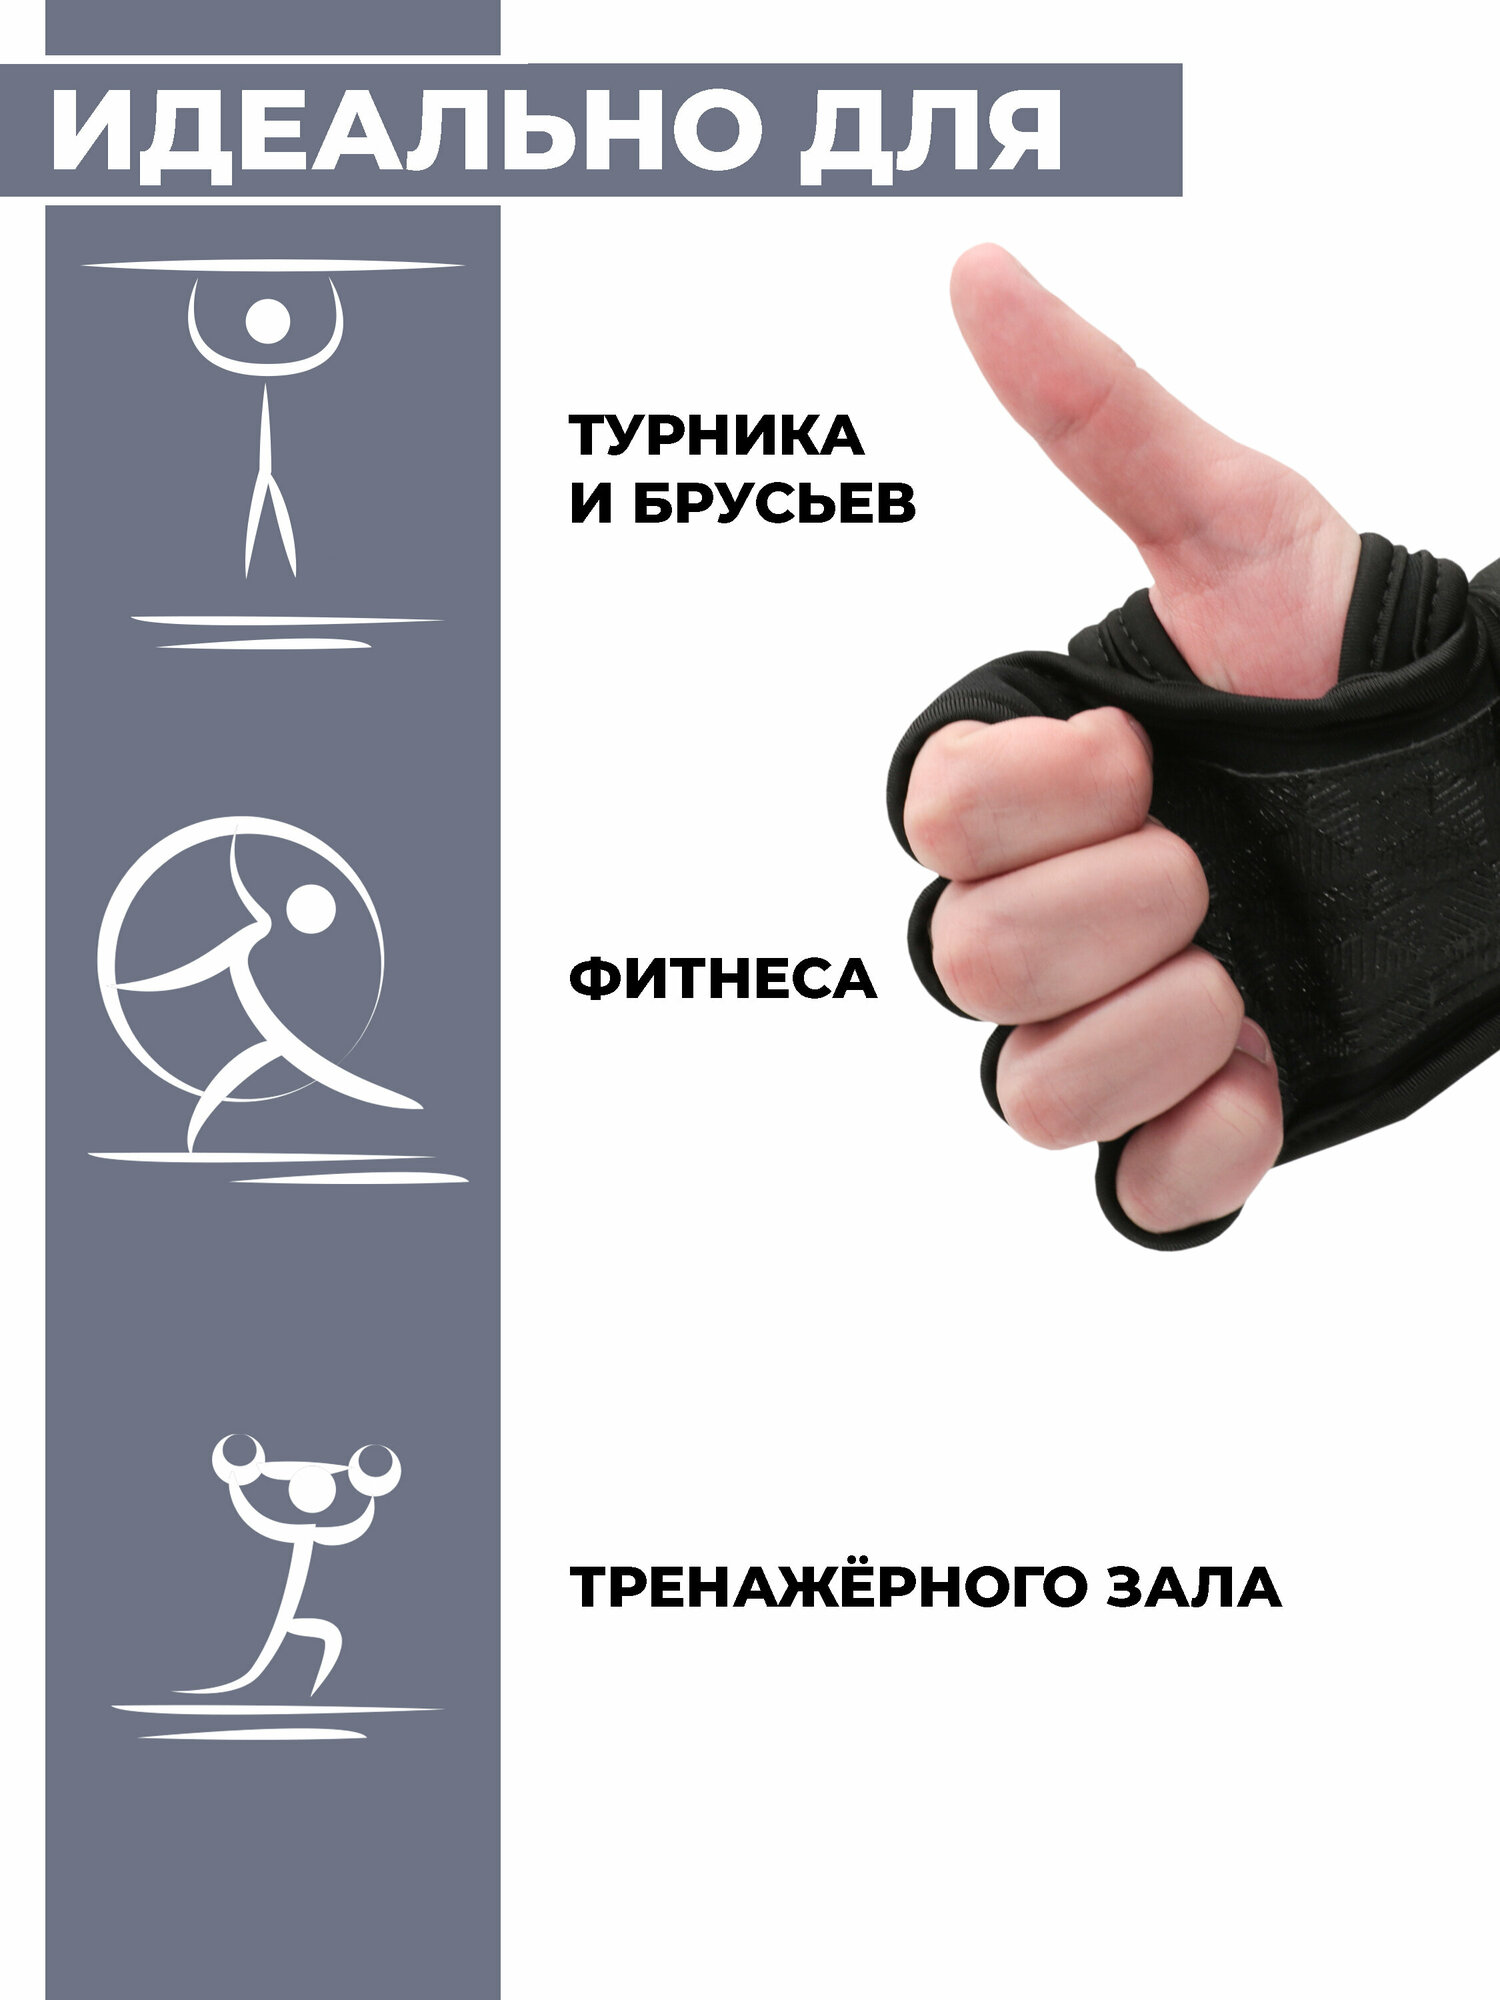 Перчатки для турника и грифа Boomshakalaka, цвет черный, размер L, обхват ладони 218-238 мм.